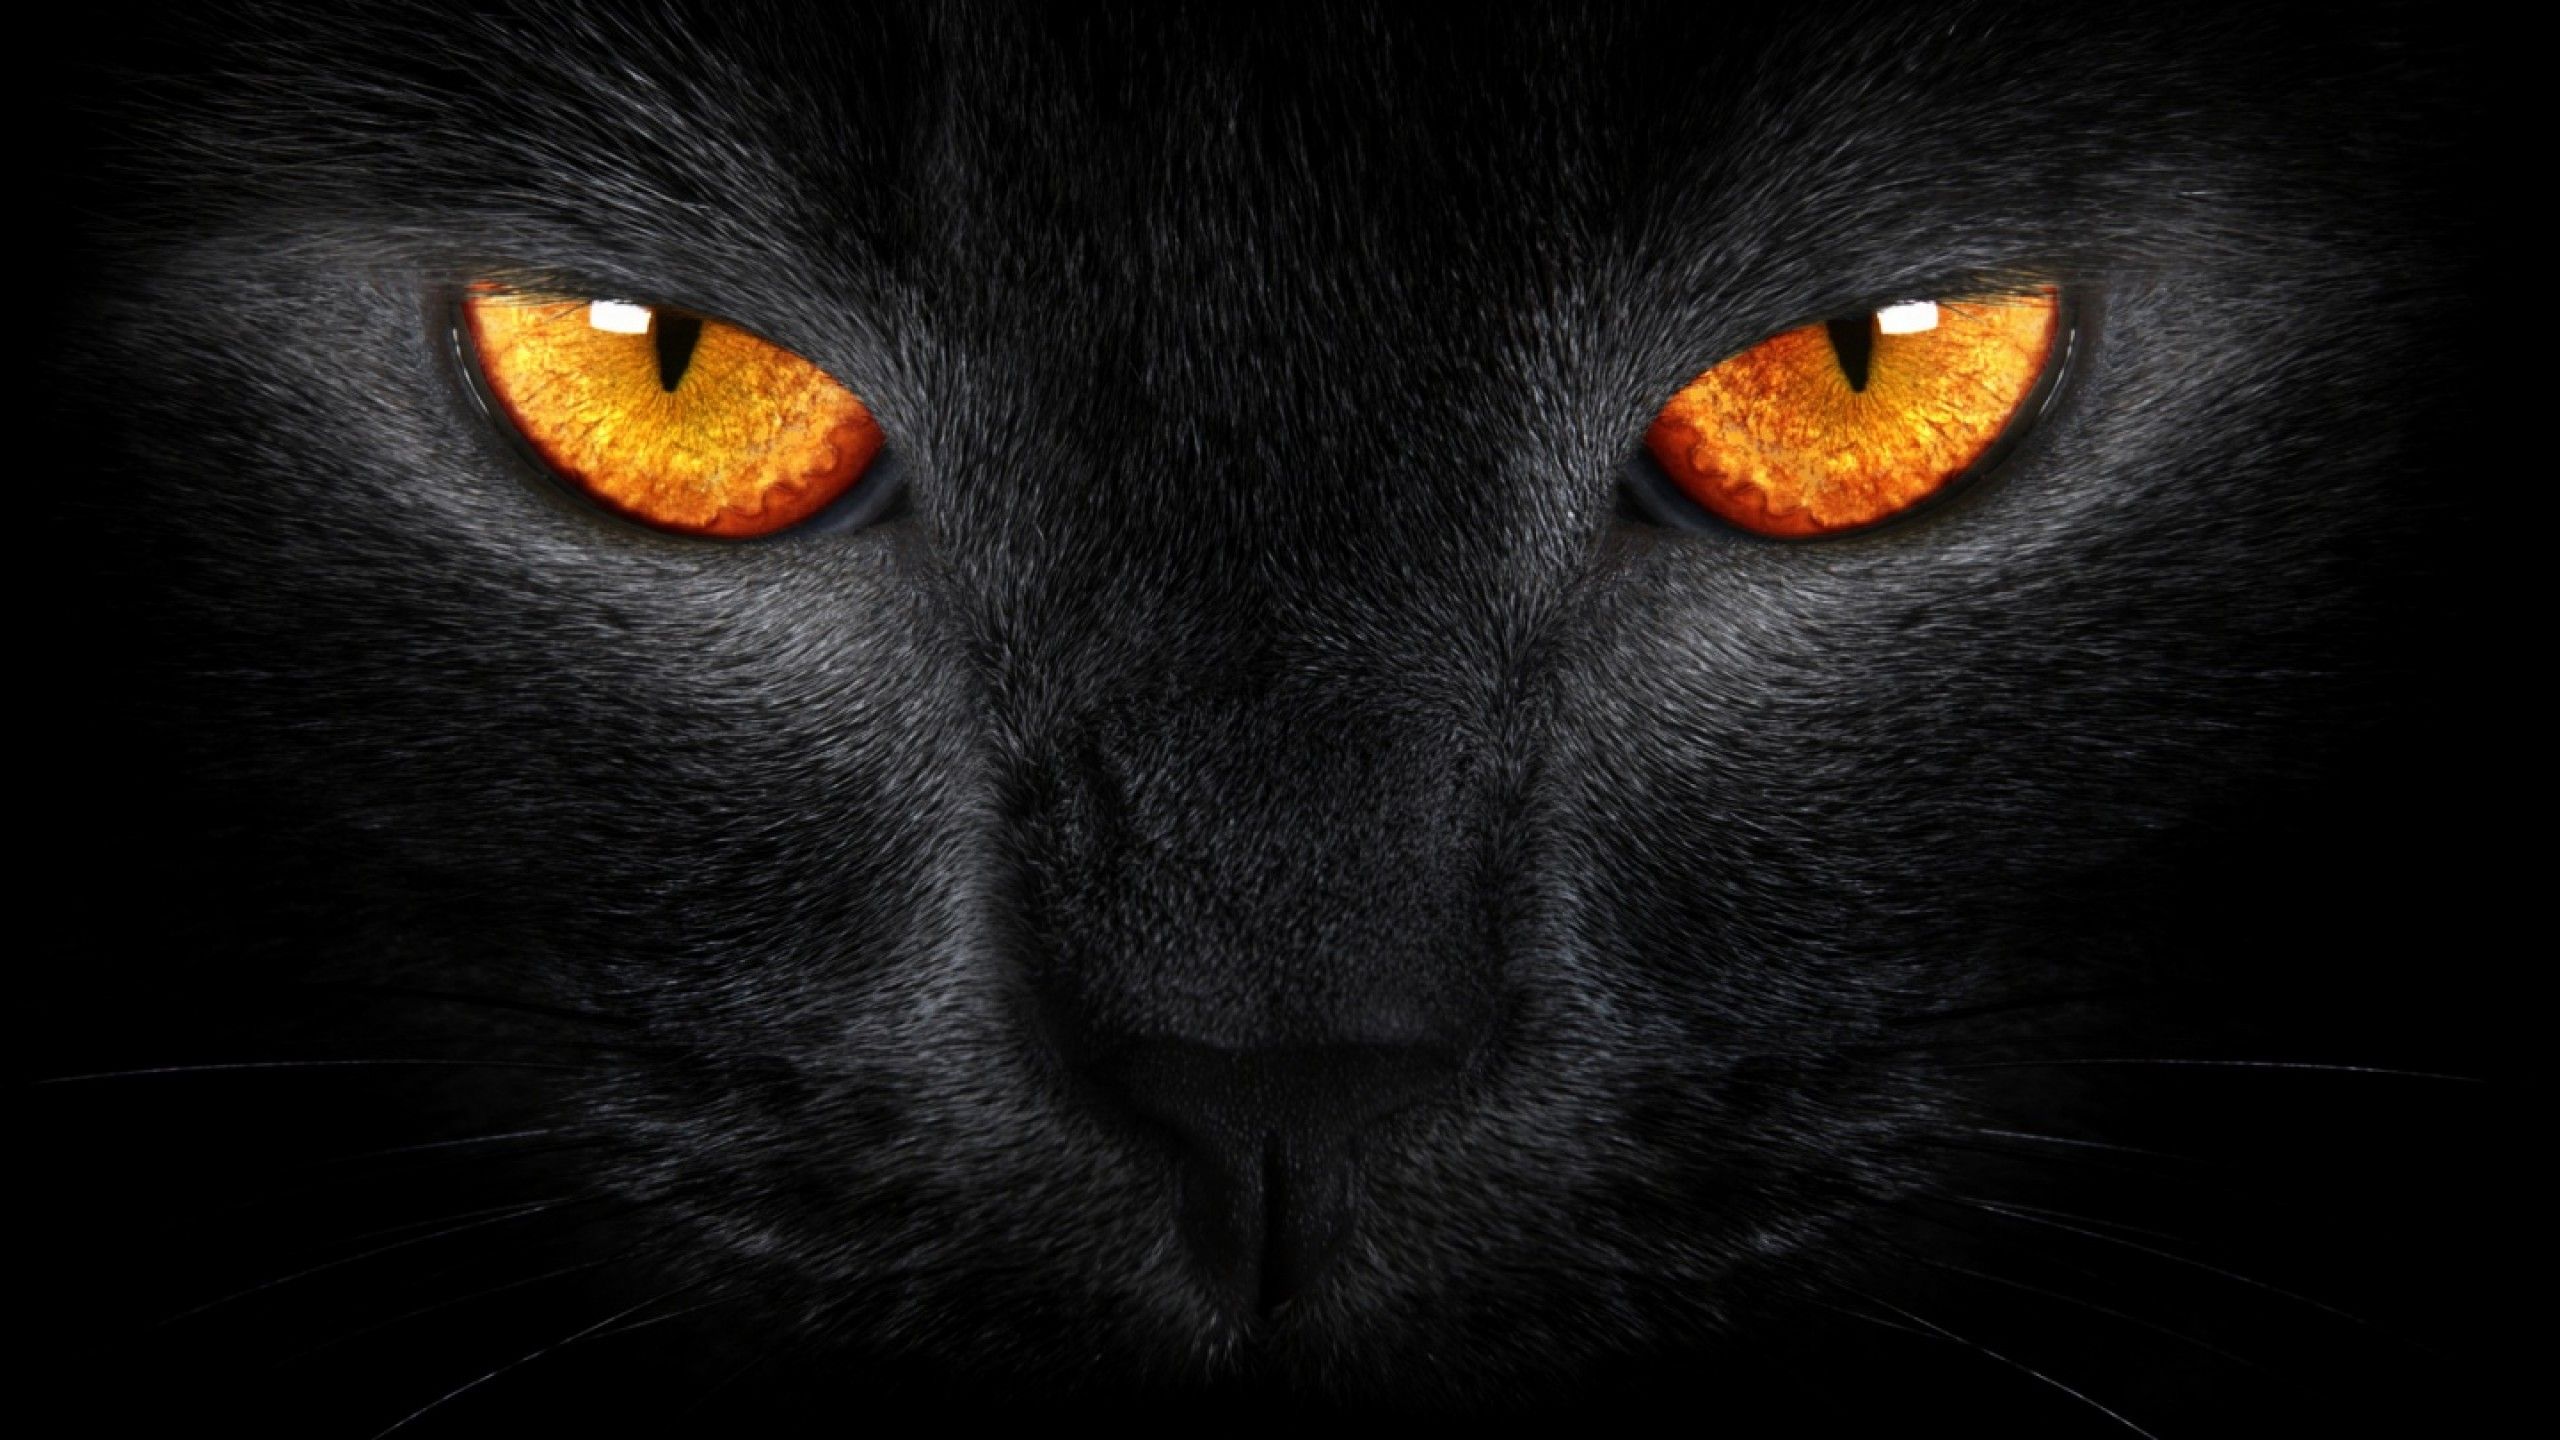 Wallpapers Tiger Eye Homepage Cat Black Orange Eyes 2560x1440 ...